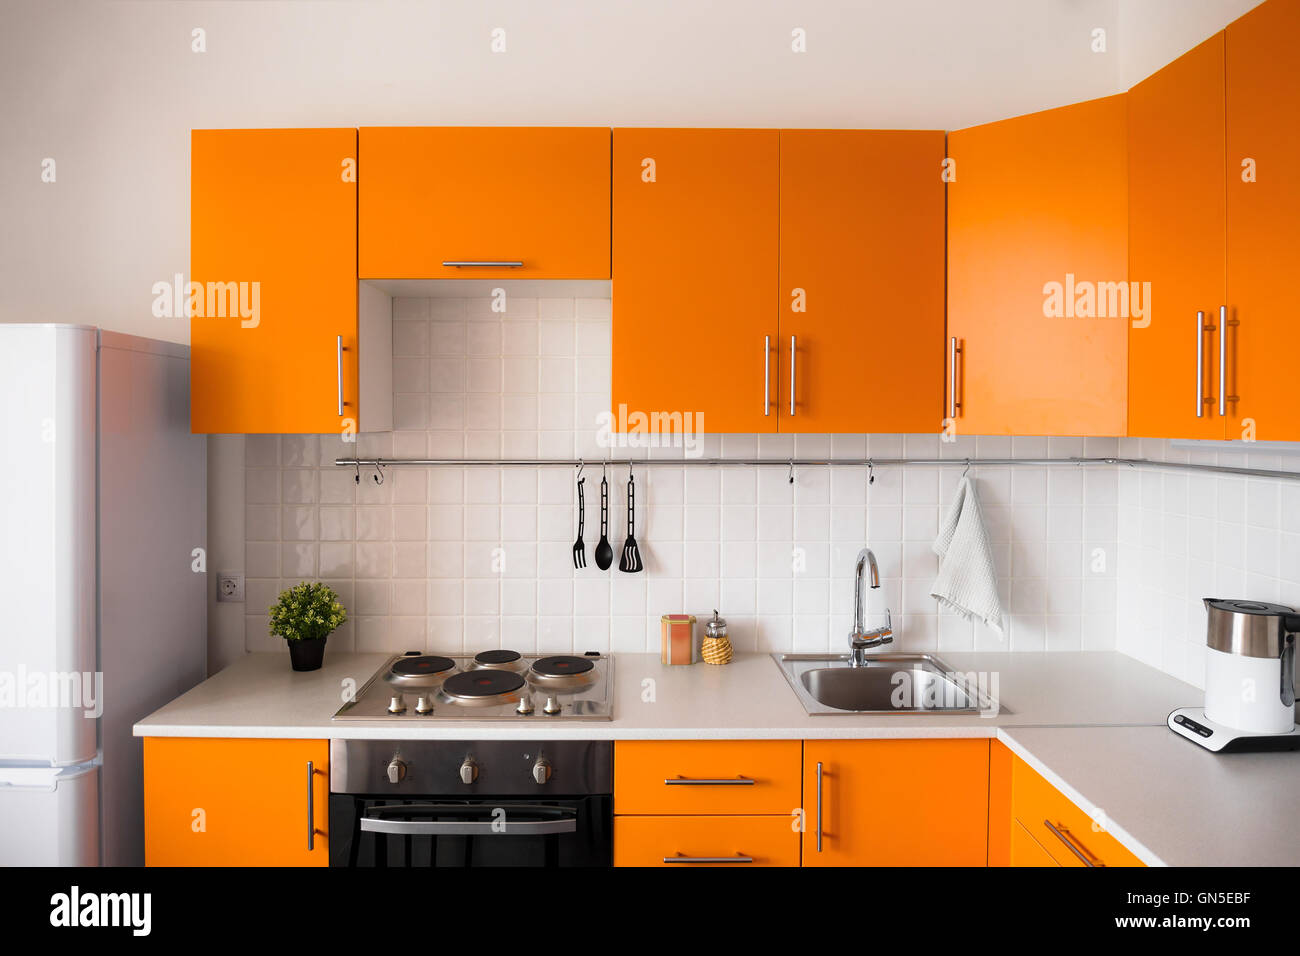 Orange kitchen set in modern style Stock Photo